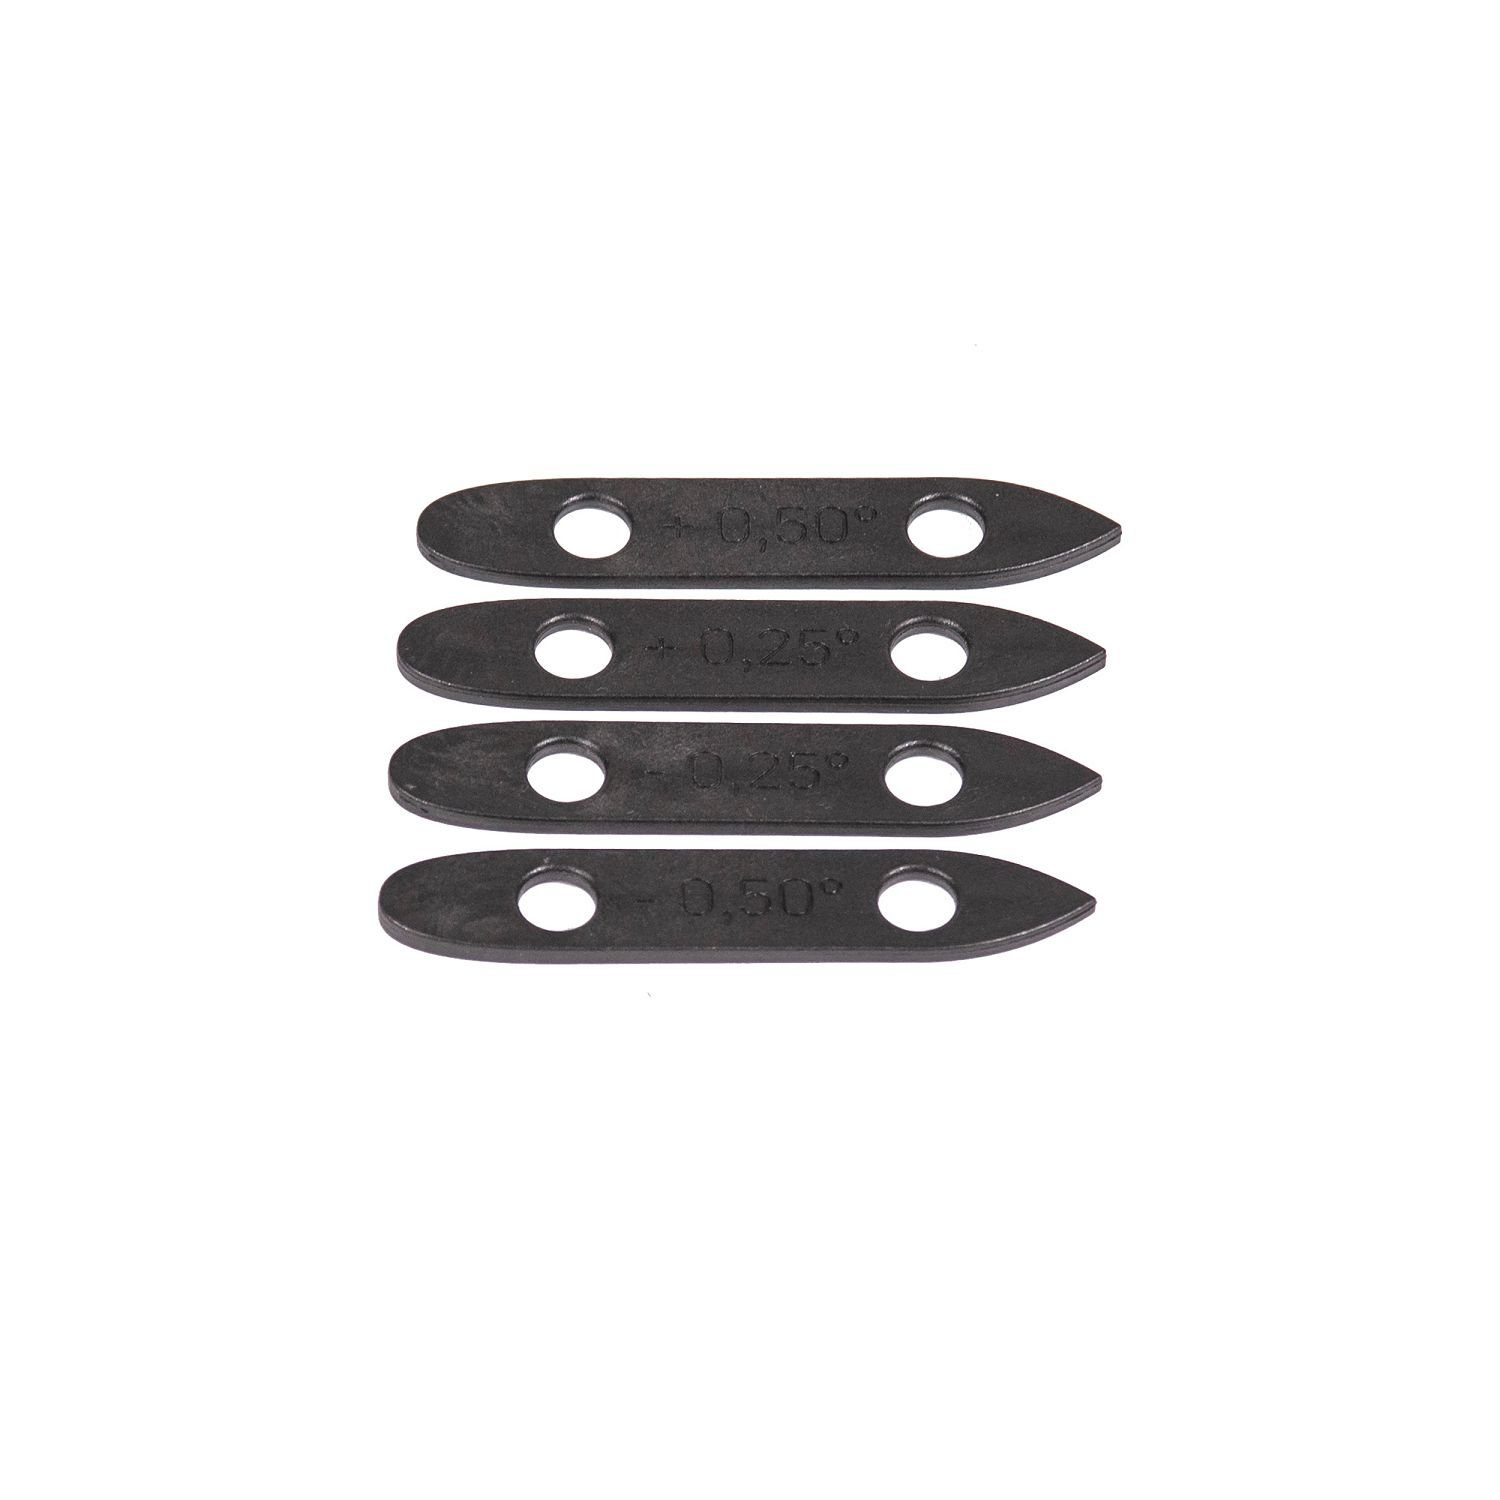 Fanatic SUP-Board Fanatic Parts Wedge (4pcs) Set black Foil Foil